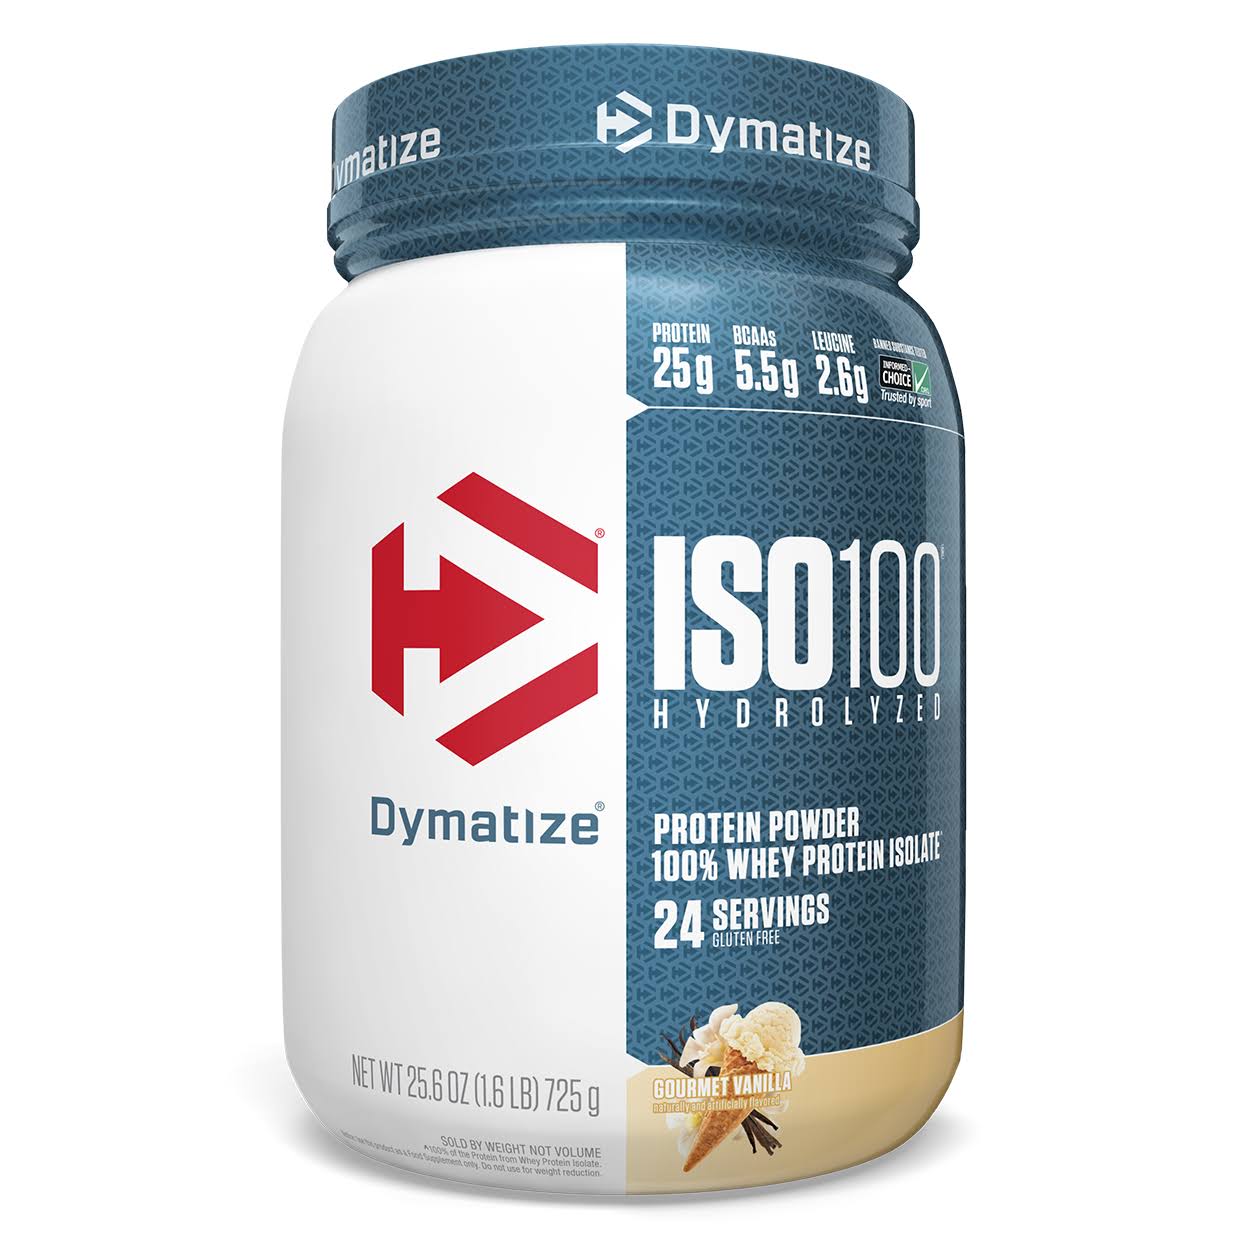 Dymatize ISO100 Hydrolyzed 100% Whey Protein Isolate - Gourmet Vanilla, 1.6lb